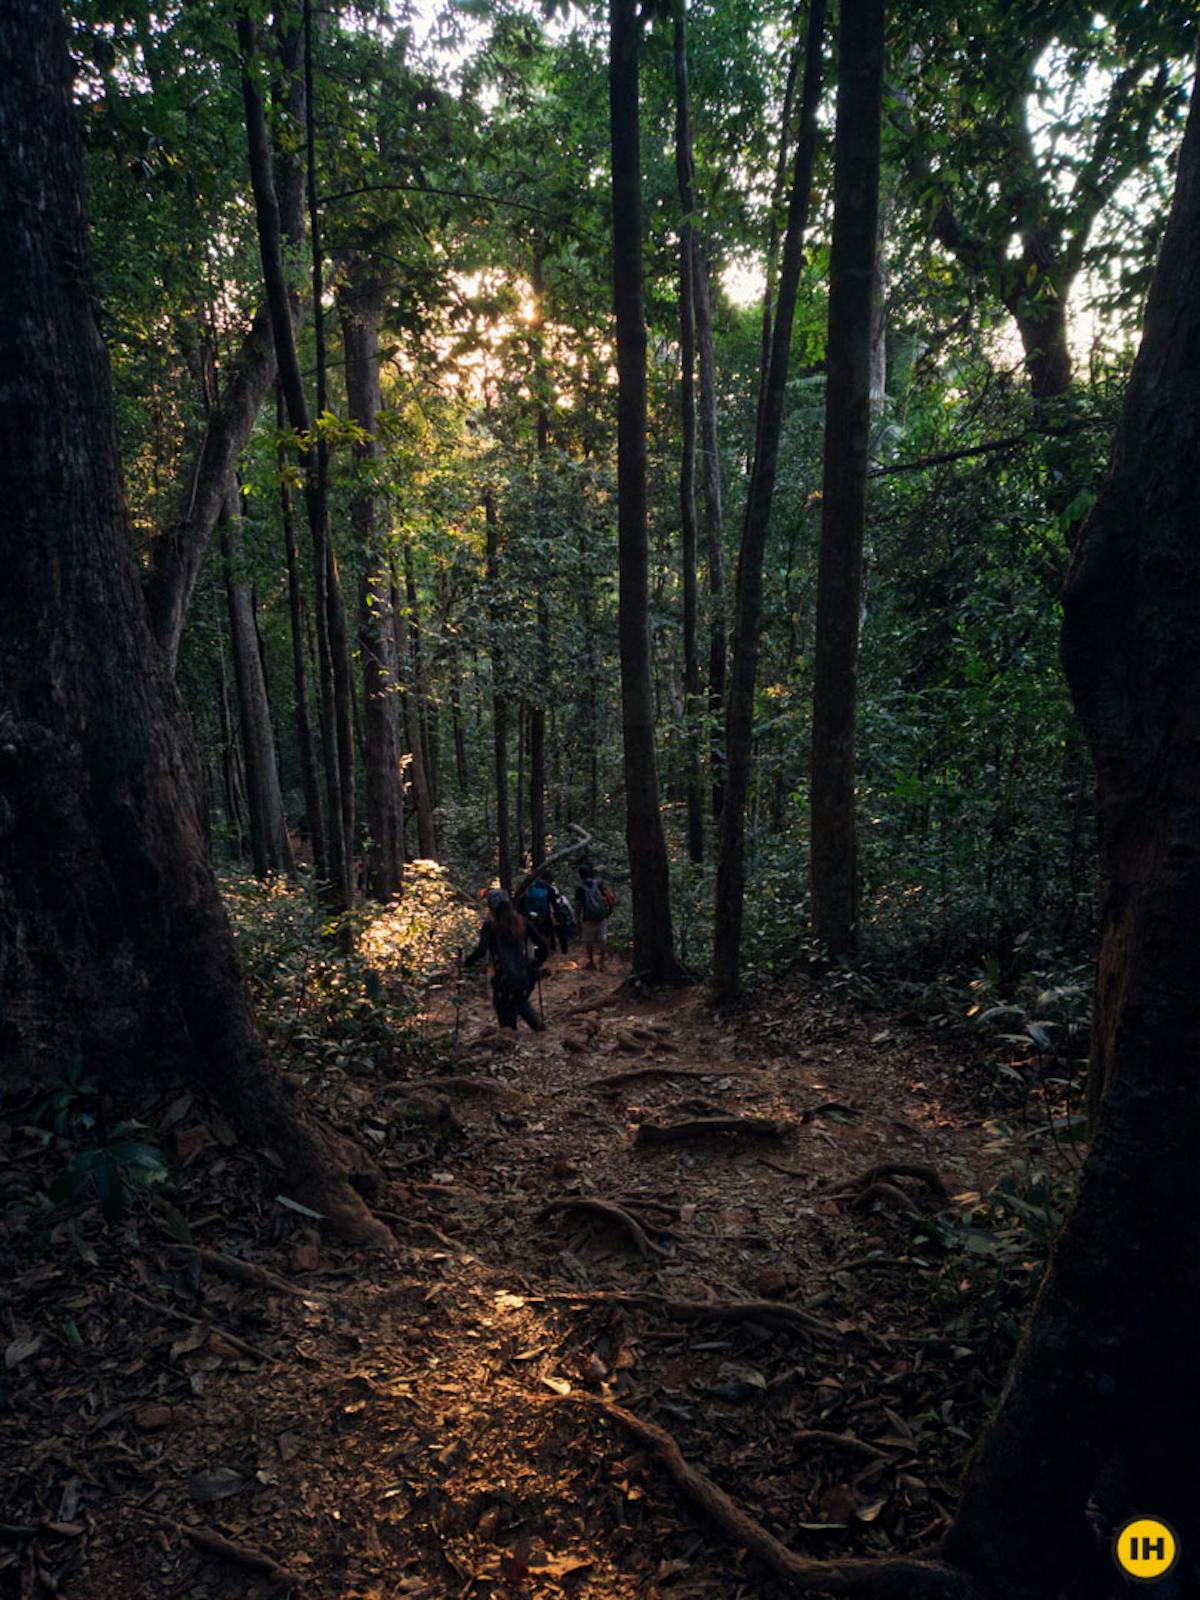 Kumaraparvatha Trek - Sunlight through the forest cover - Indiahikes - Ryan Venattu